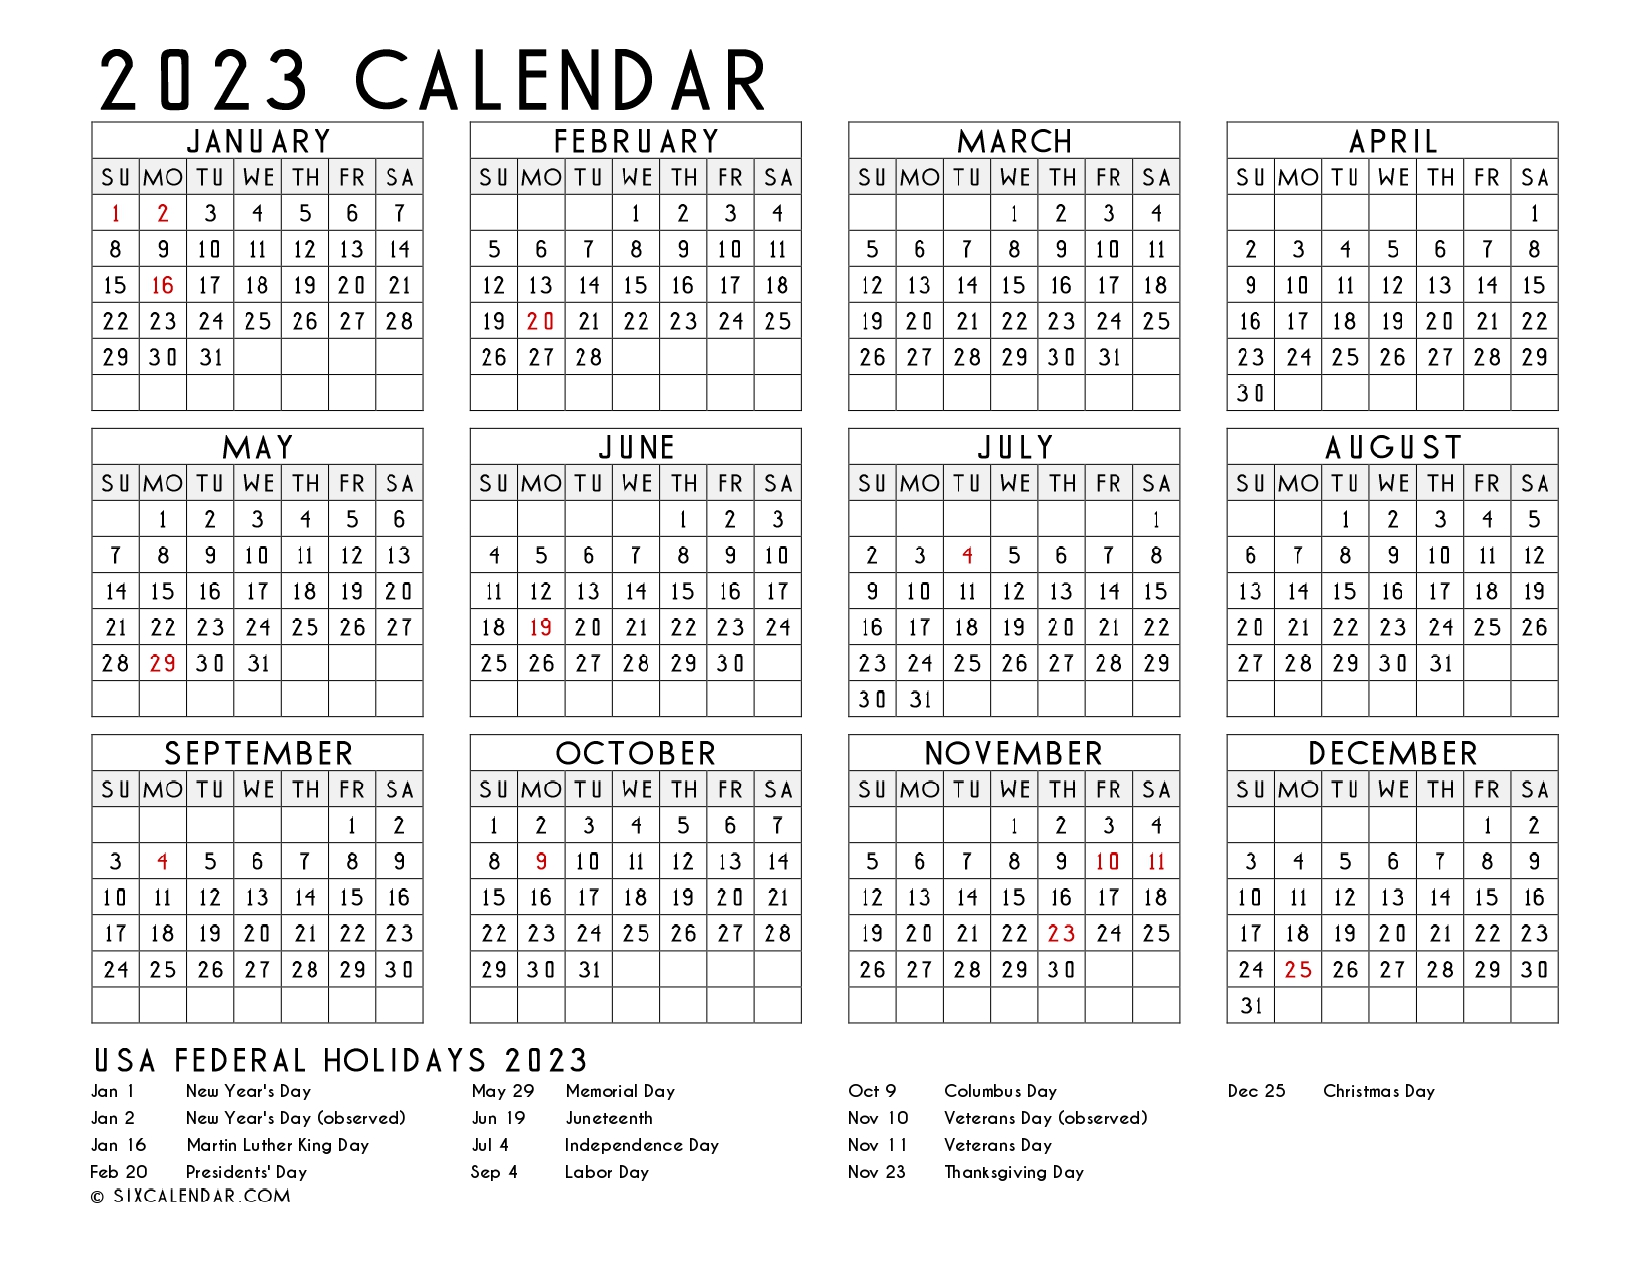 https-sixcalendar-2023-calendar-printable-on